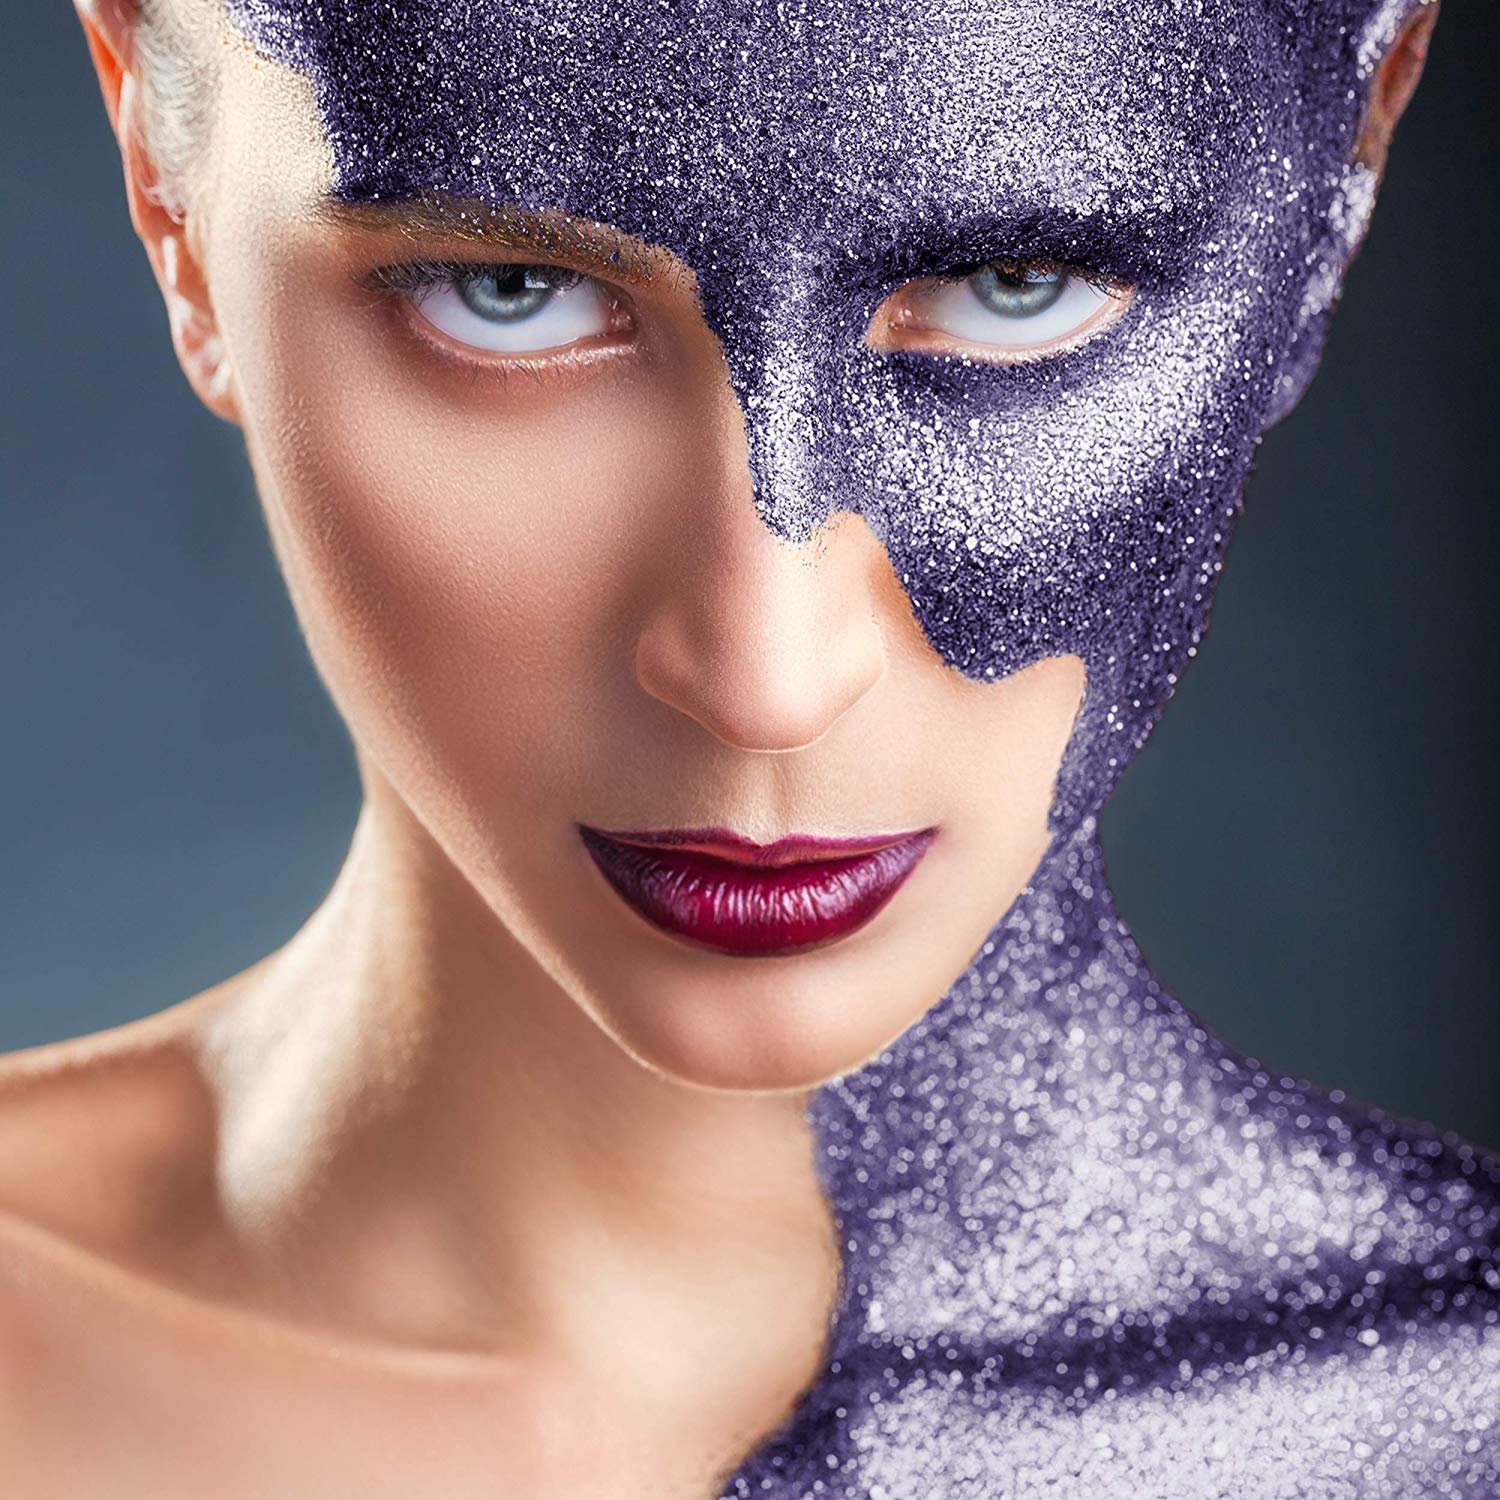 Mehron Makeup Paradise AQ Glitter Face and Body Paint, PURPLE